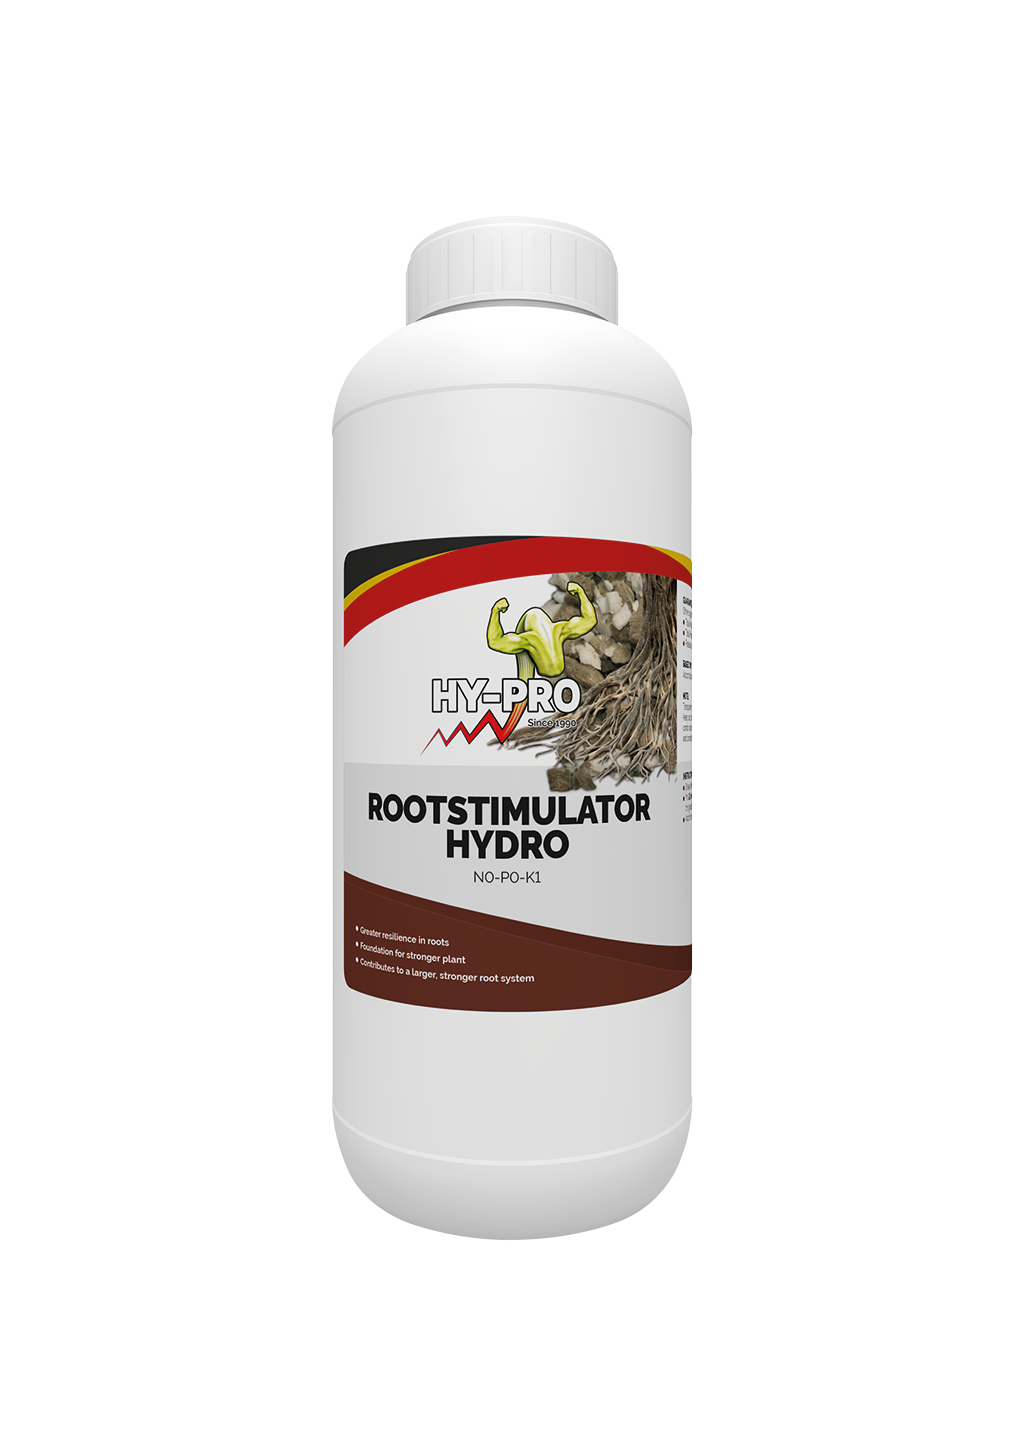 Hy-pro Hydro Root Stimulator - 1 liter